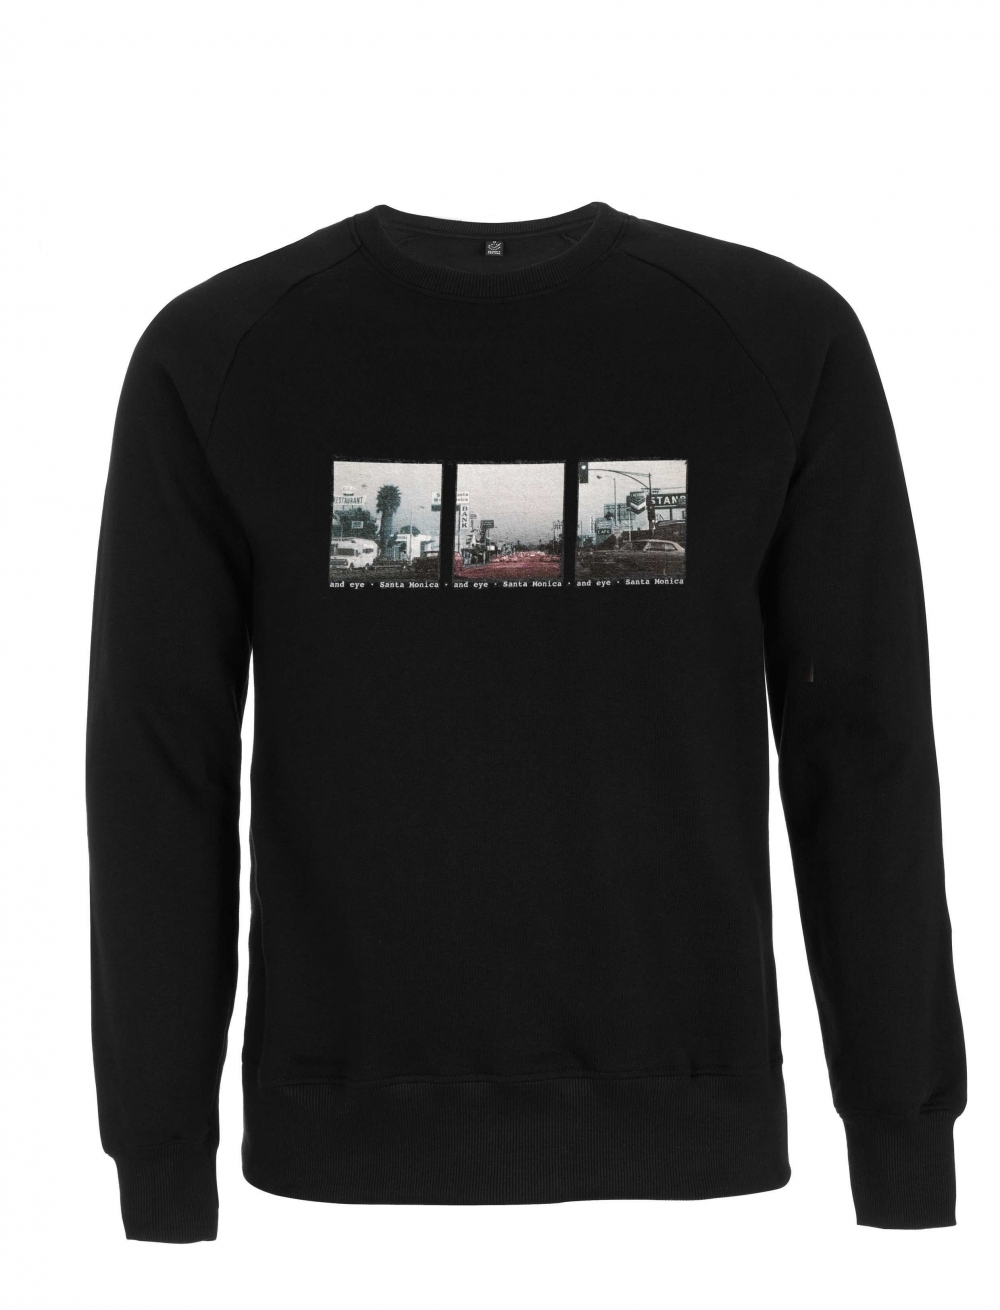 Organic cotton sweatshirt with a vintage image of Santa Monica